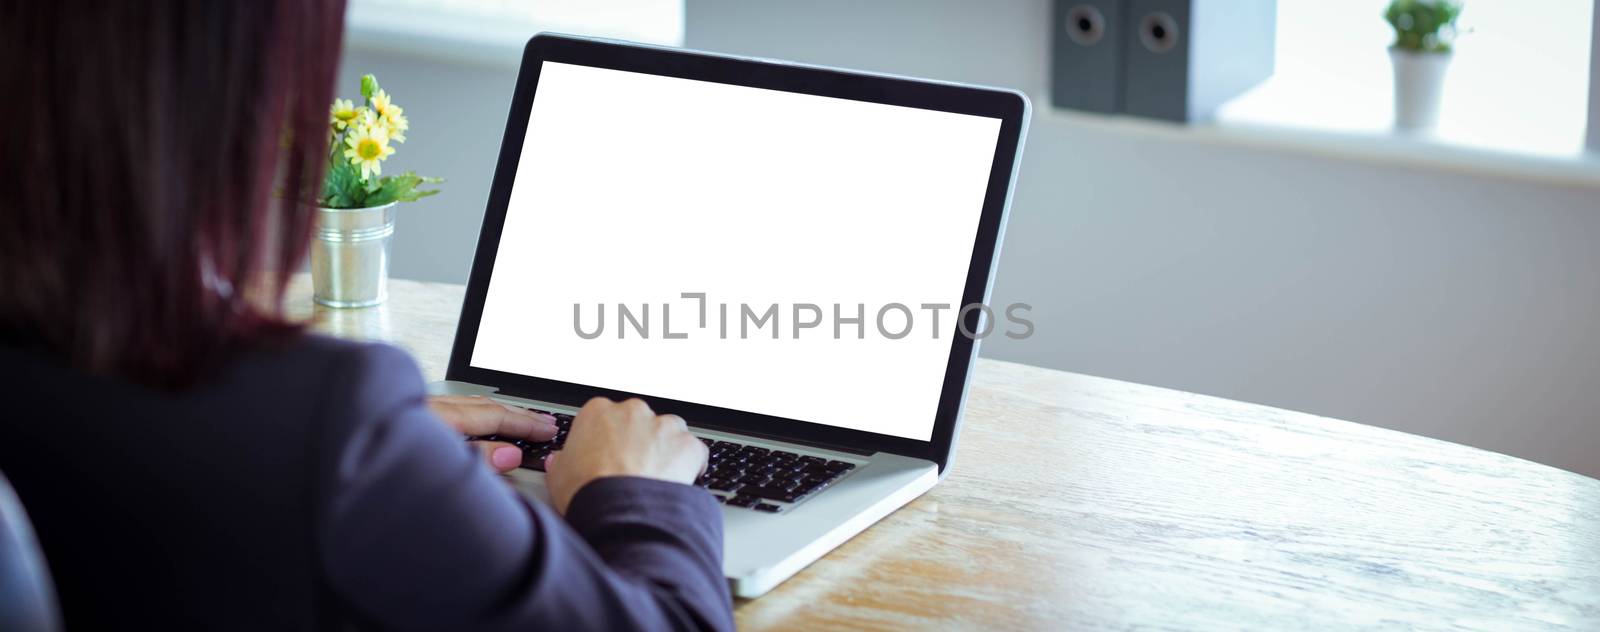 Businesswoman working at her desk on laptop by Wavebreakmedia